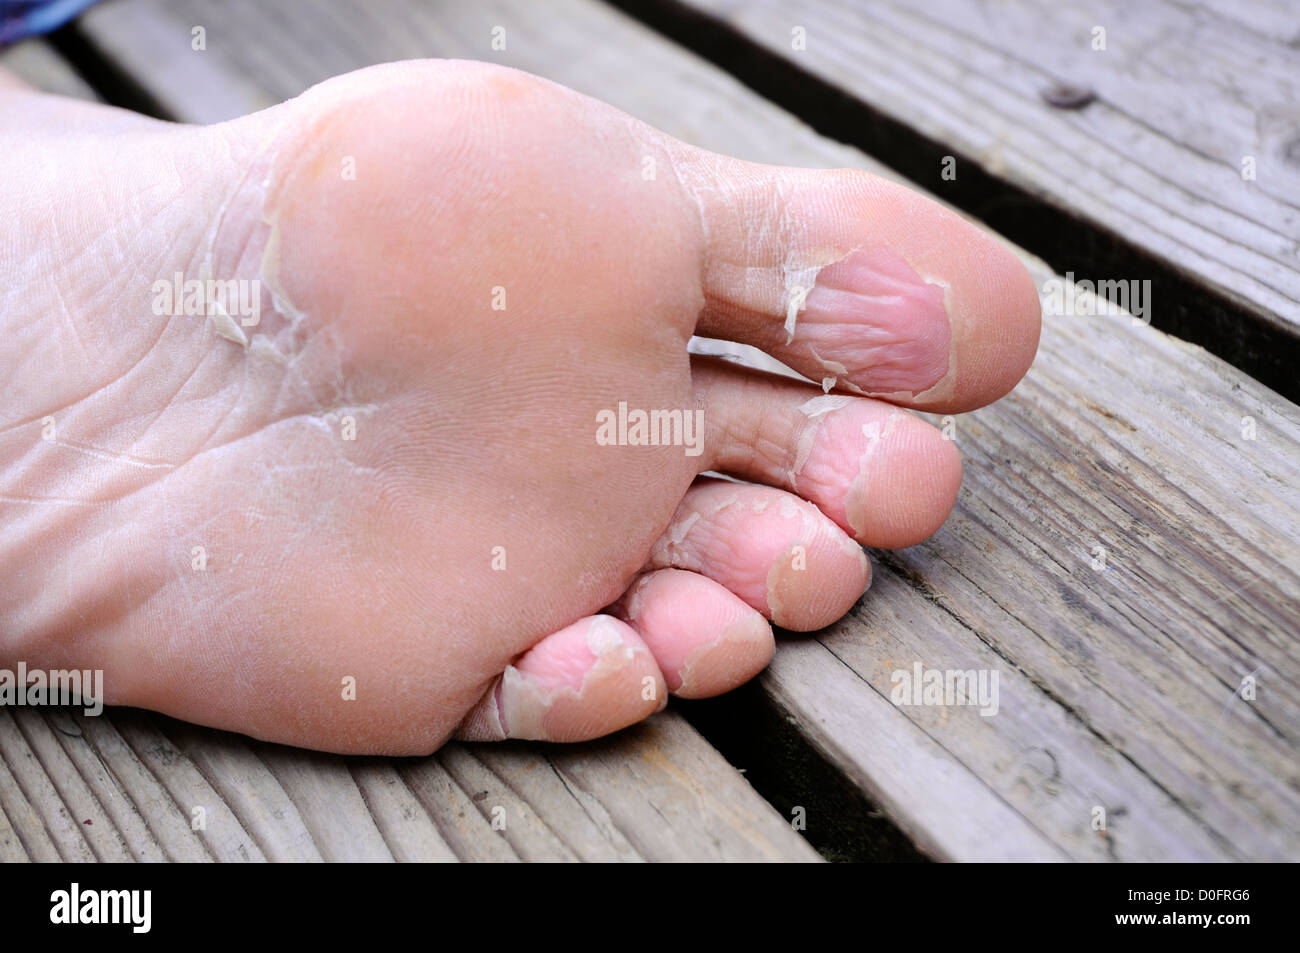 peeling foot with dead skin Stock Photo 